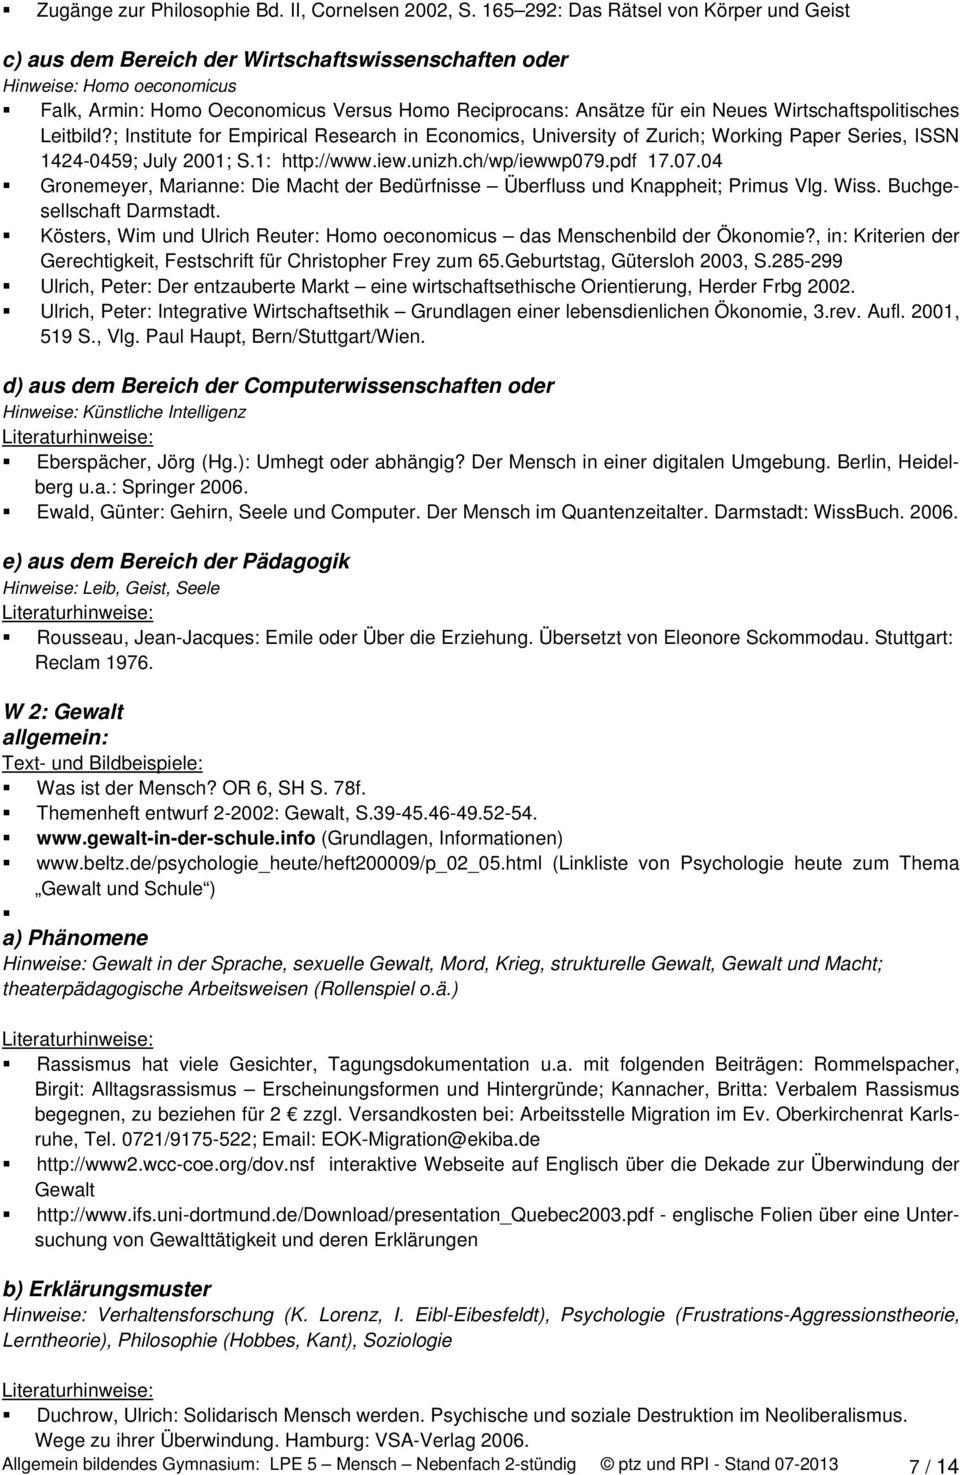 Wirtschaftspolitisches Leitbild?; Institute for Empirical Research in Economics, University of Zurich; Working Paper Series, ISSN 1424-0459; July 2001; S.1: http://www.iew.unizh.ch/wp/iewwp079.pdf 17.